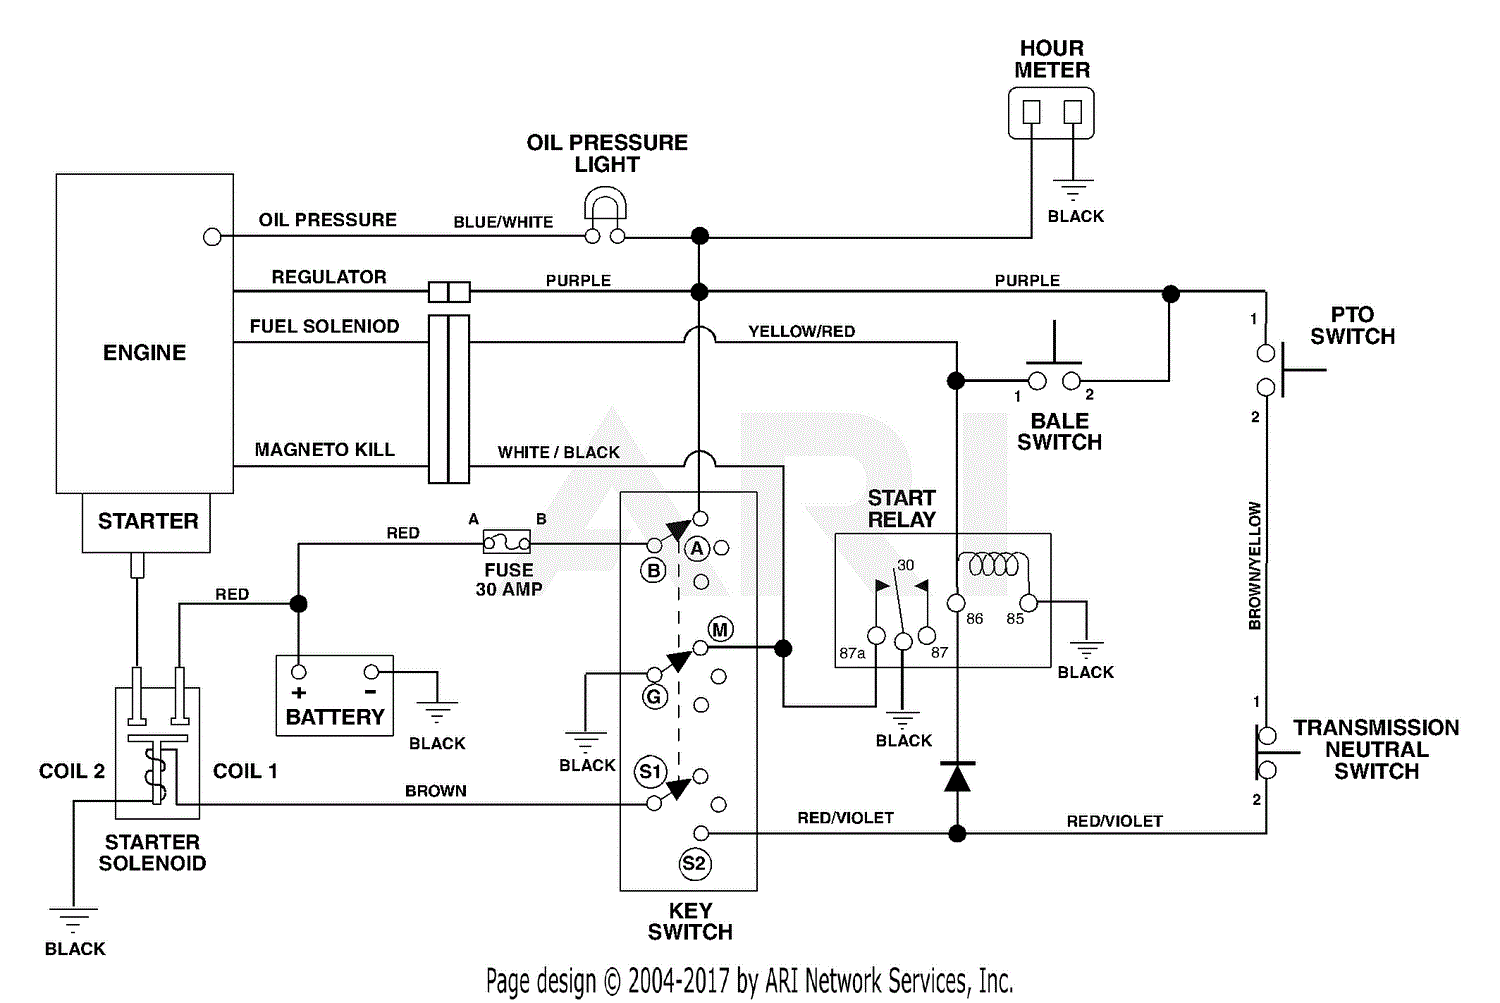 Electrical Wiring Diagram For Kawasaki Barako 175